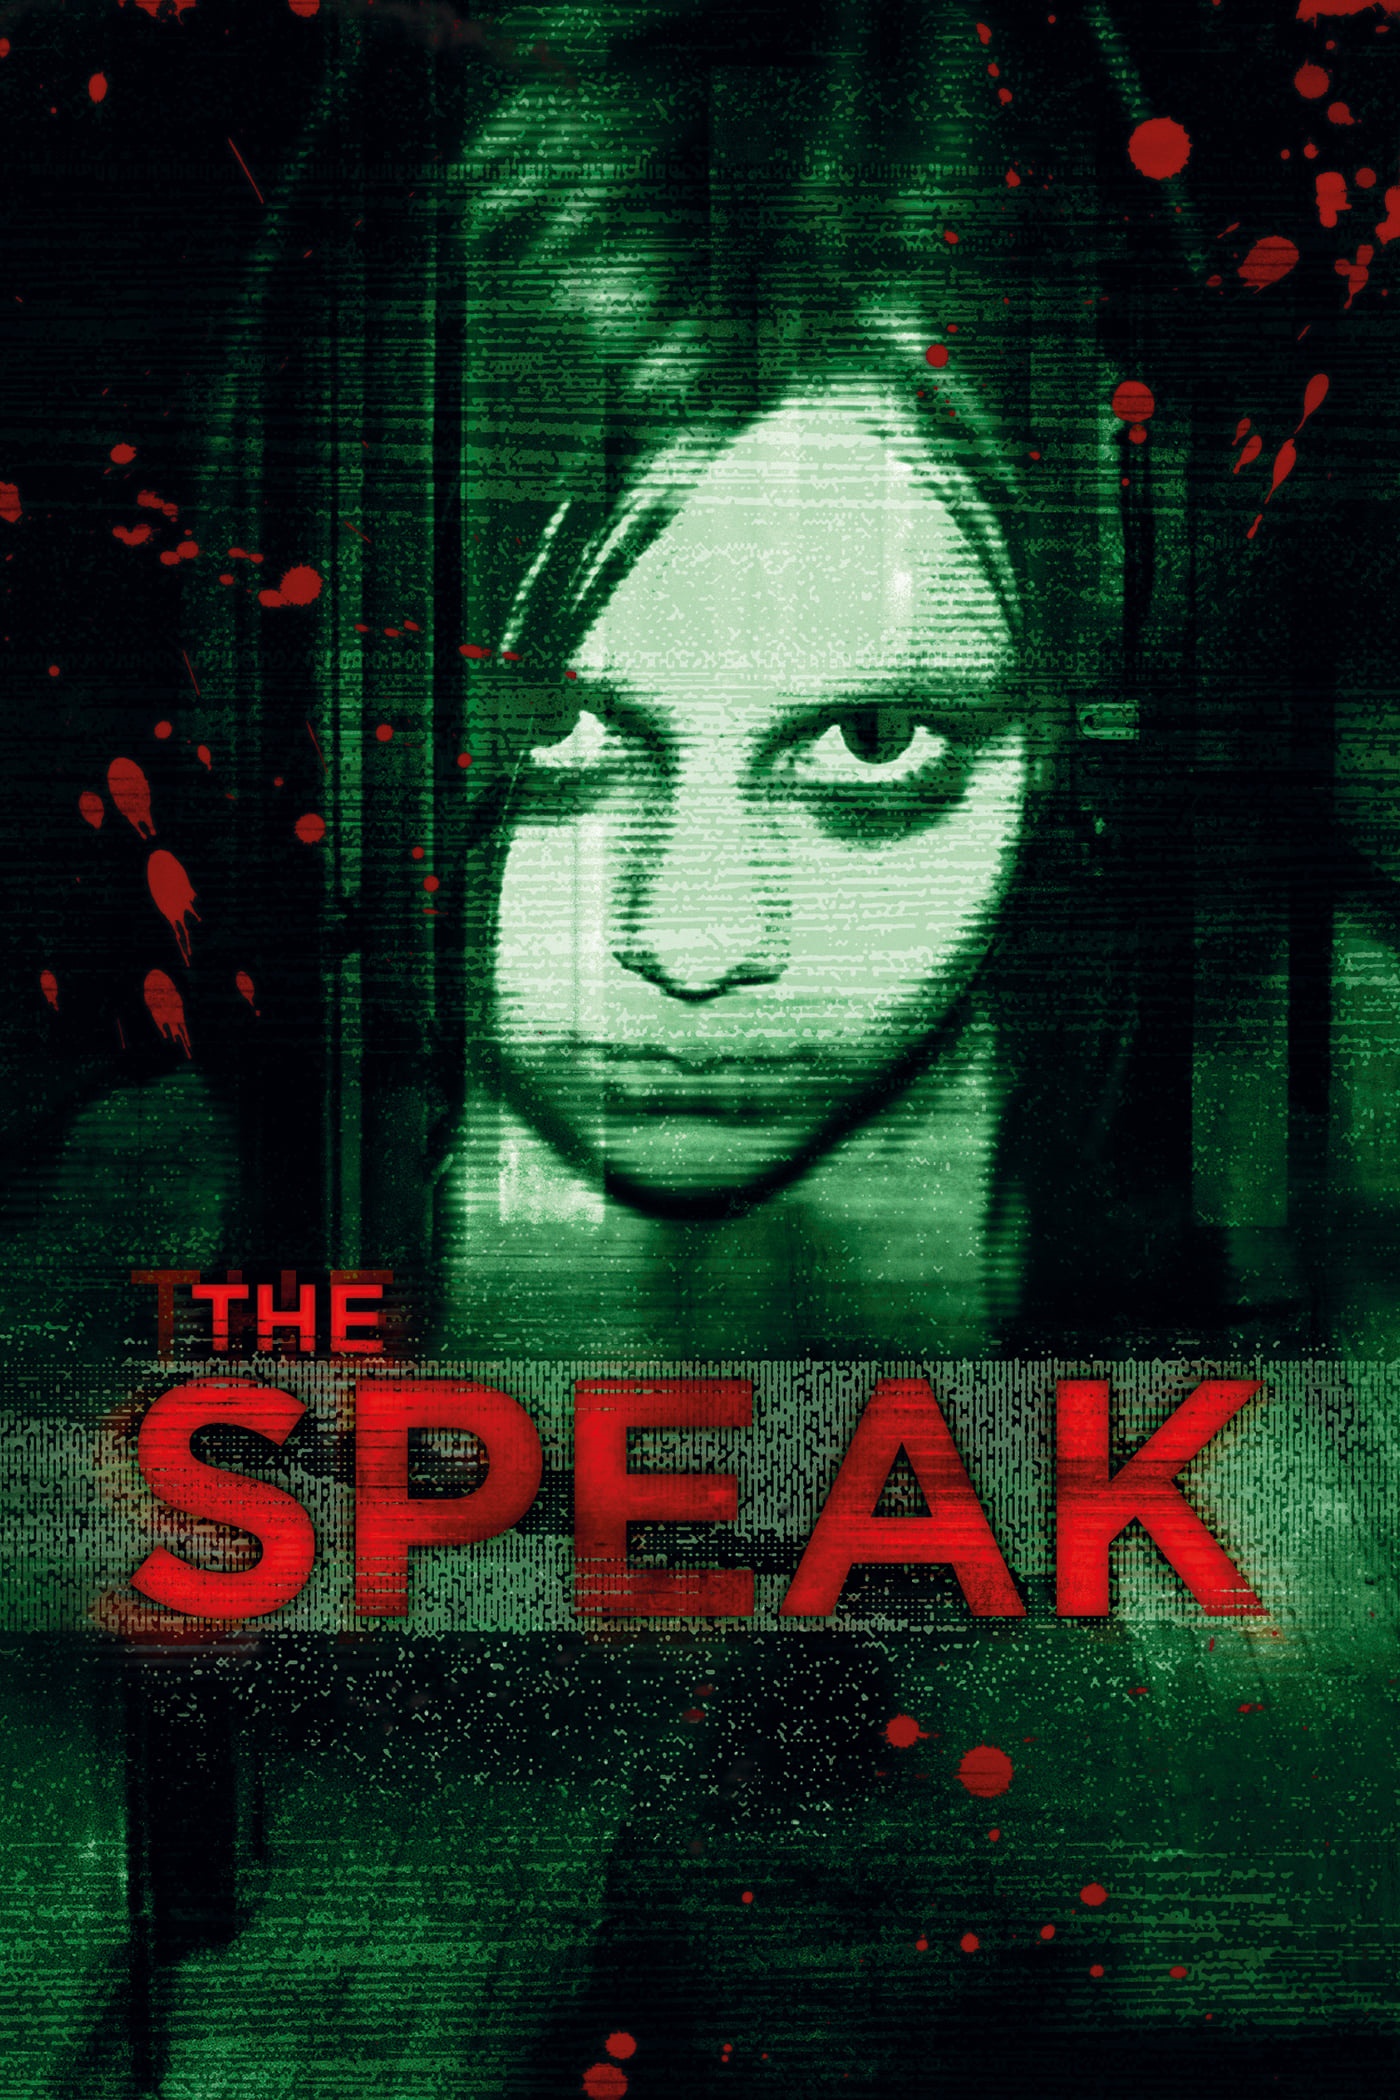 The Speak (2011) 1080p mockumentary/found footage